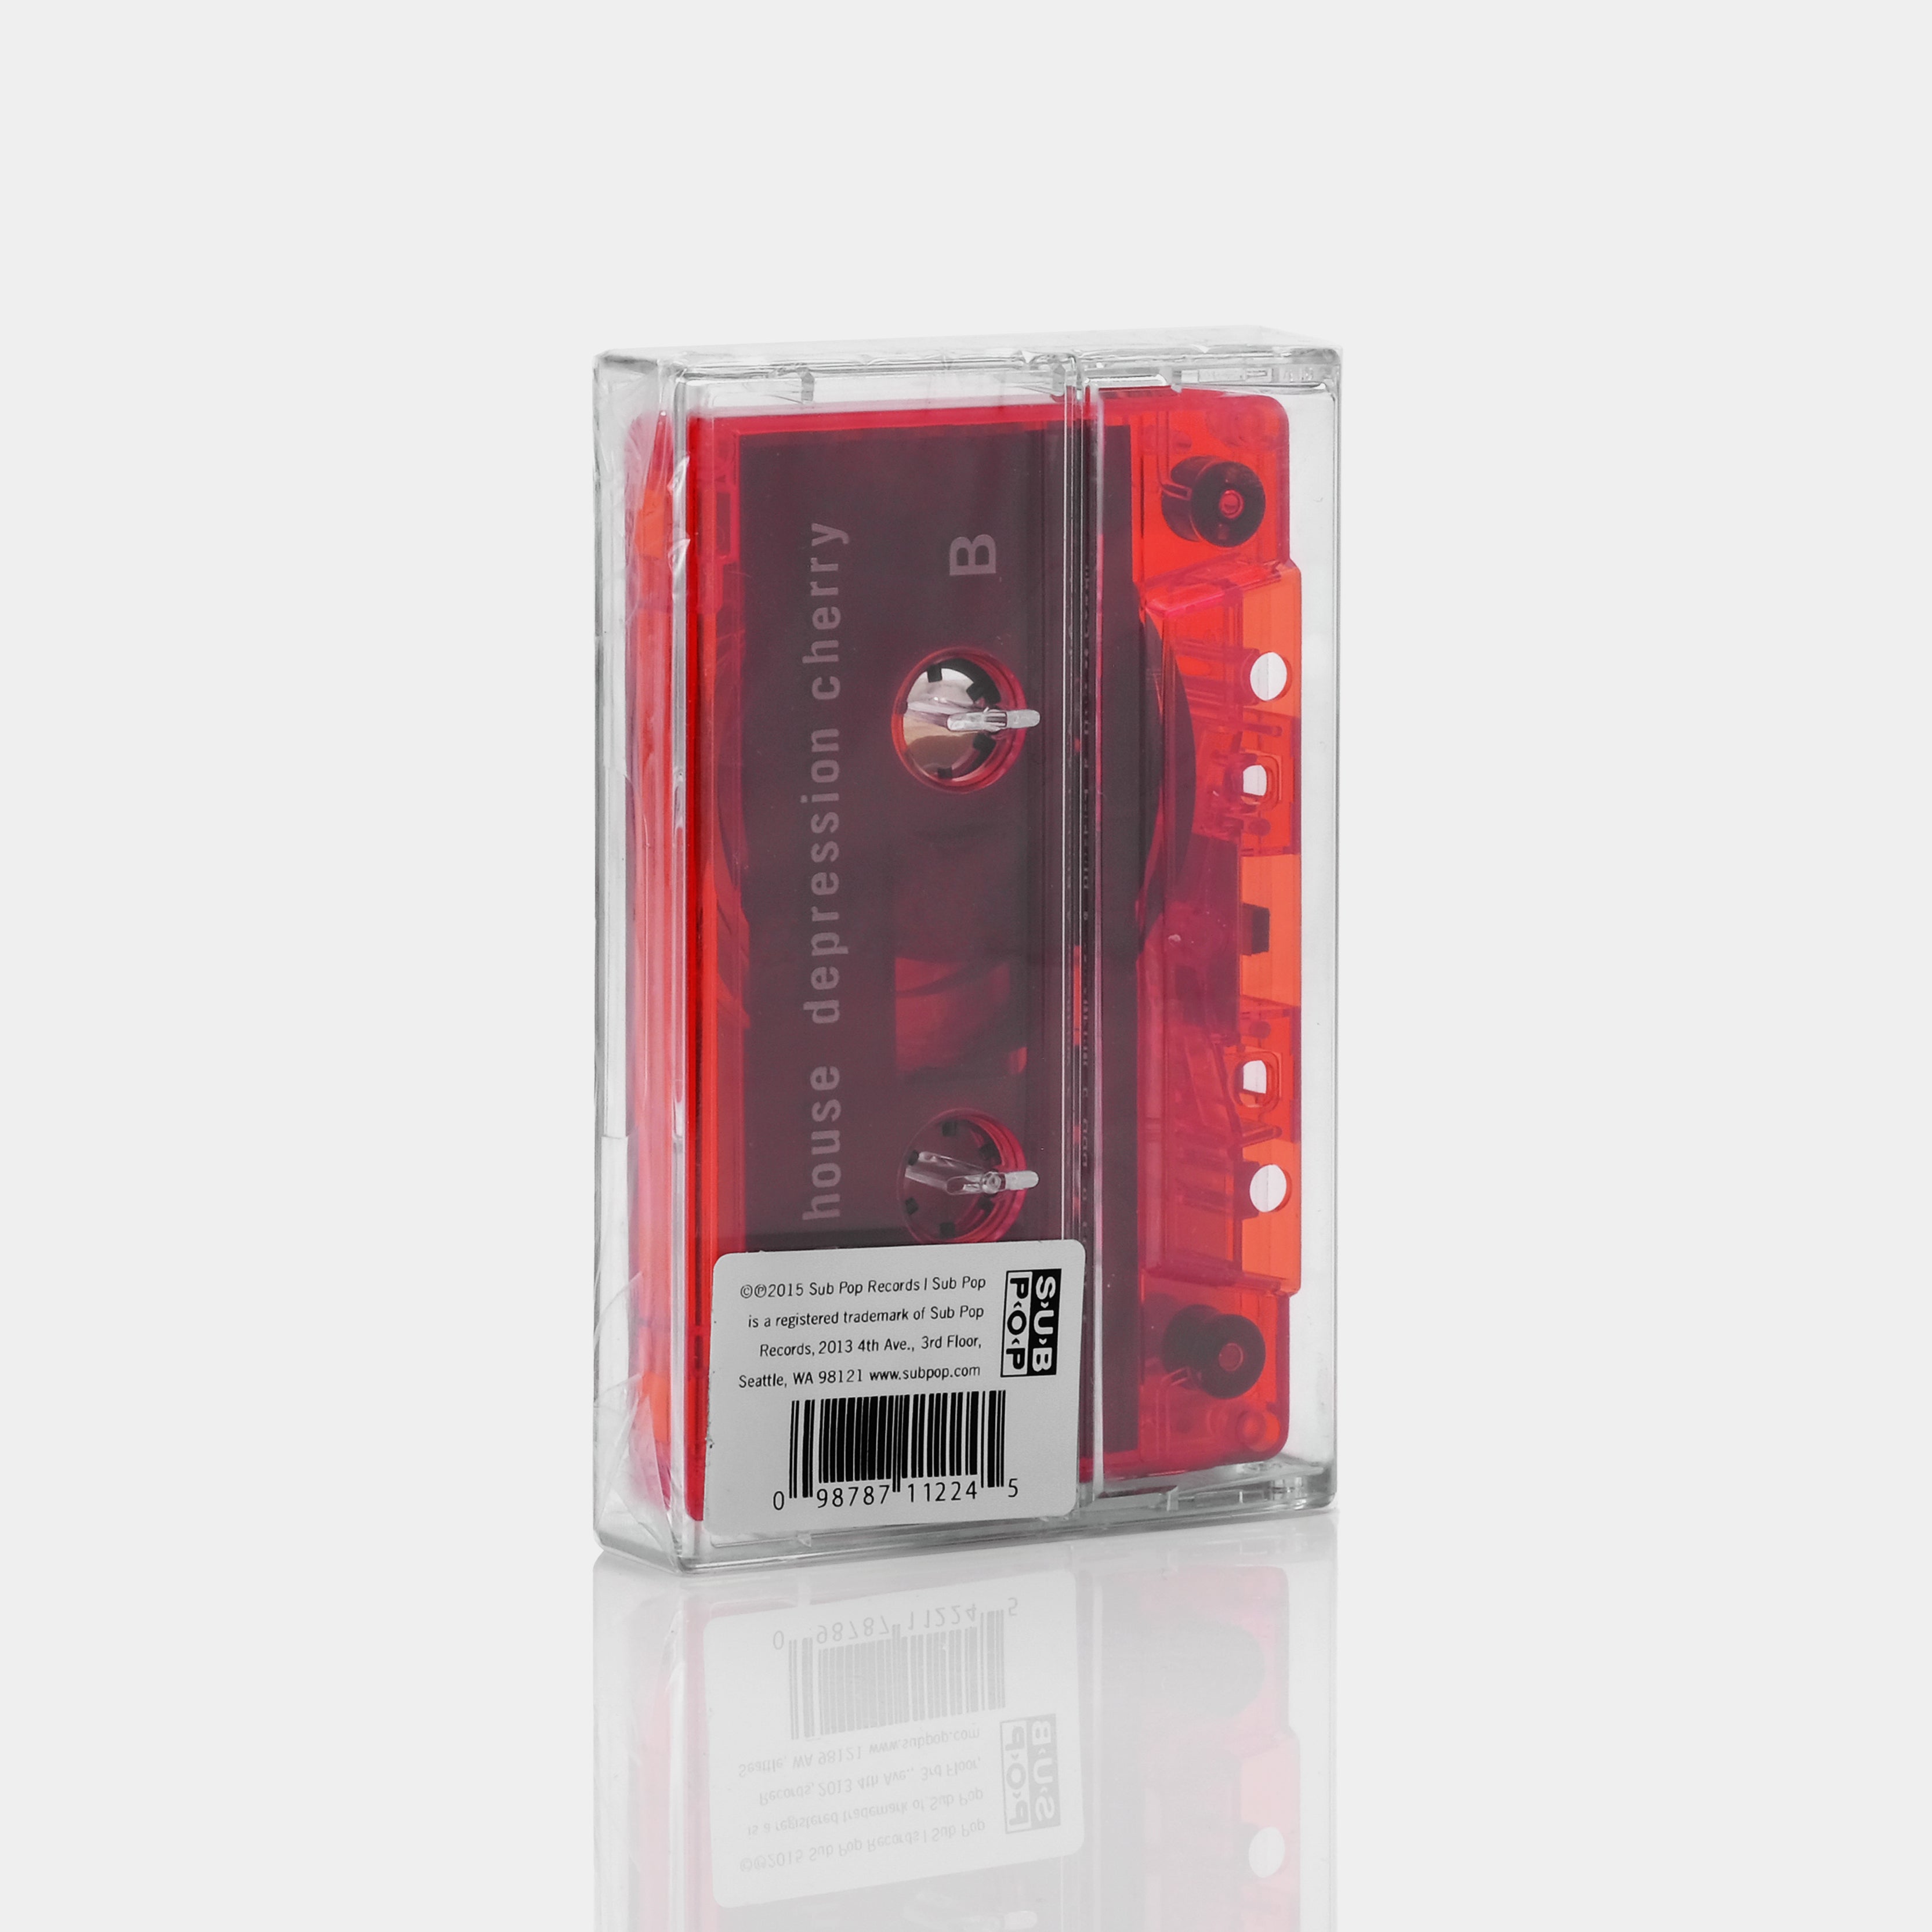 Beach House - Depression Cherry Translucent Red Cassette Tape